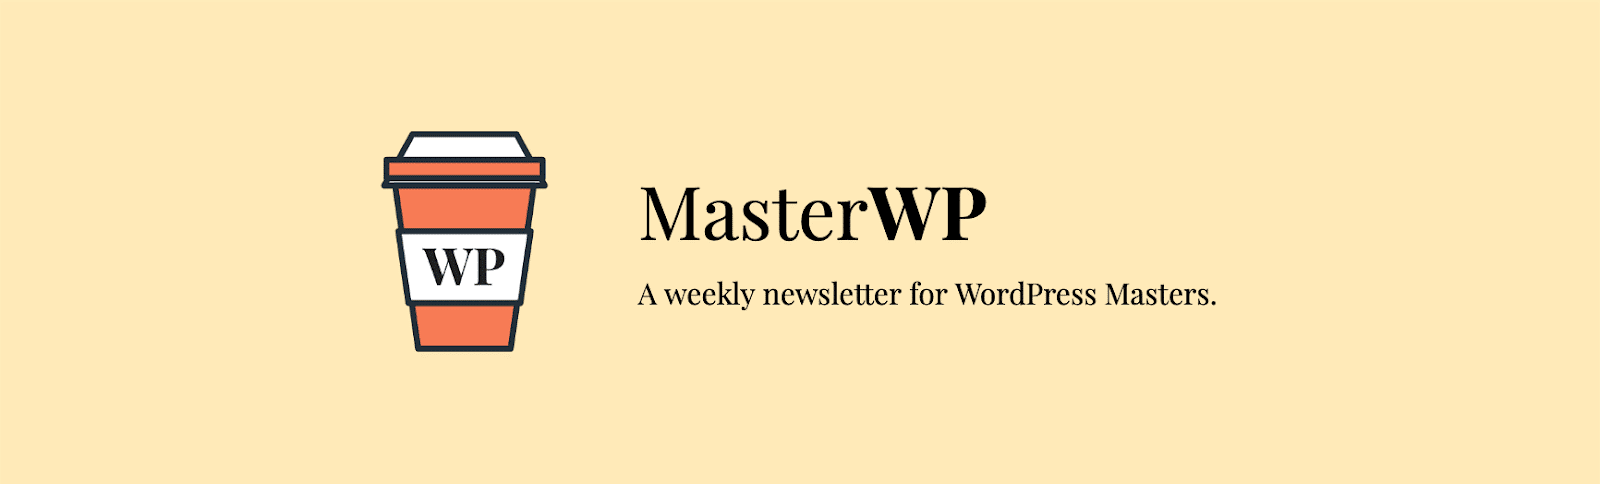 masterWP newsletter